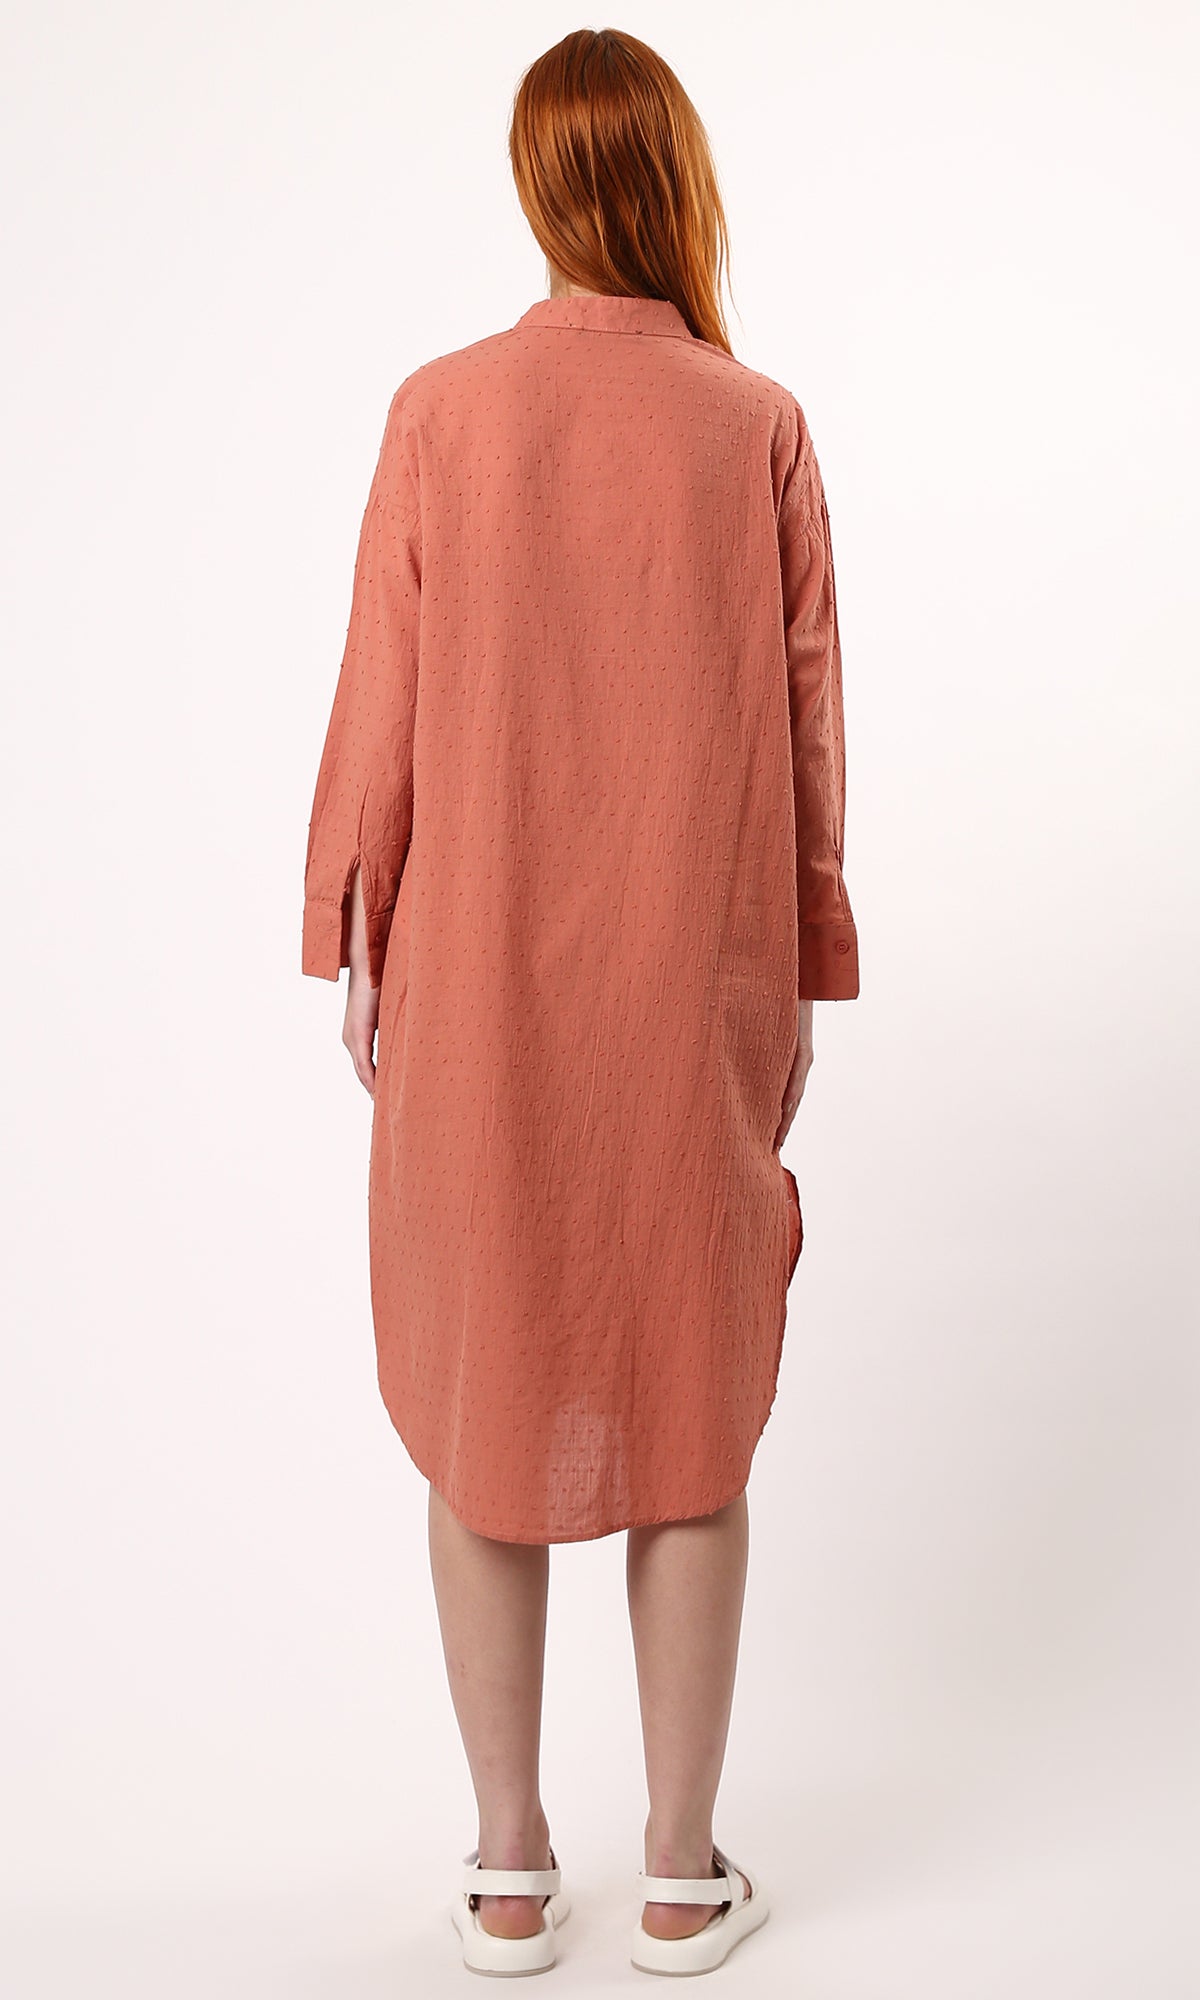 O178036 Coral Orange Casual Shirt Dress With Side Slits